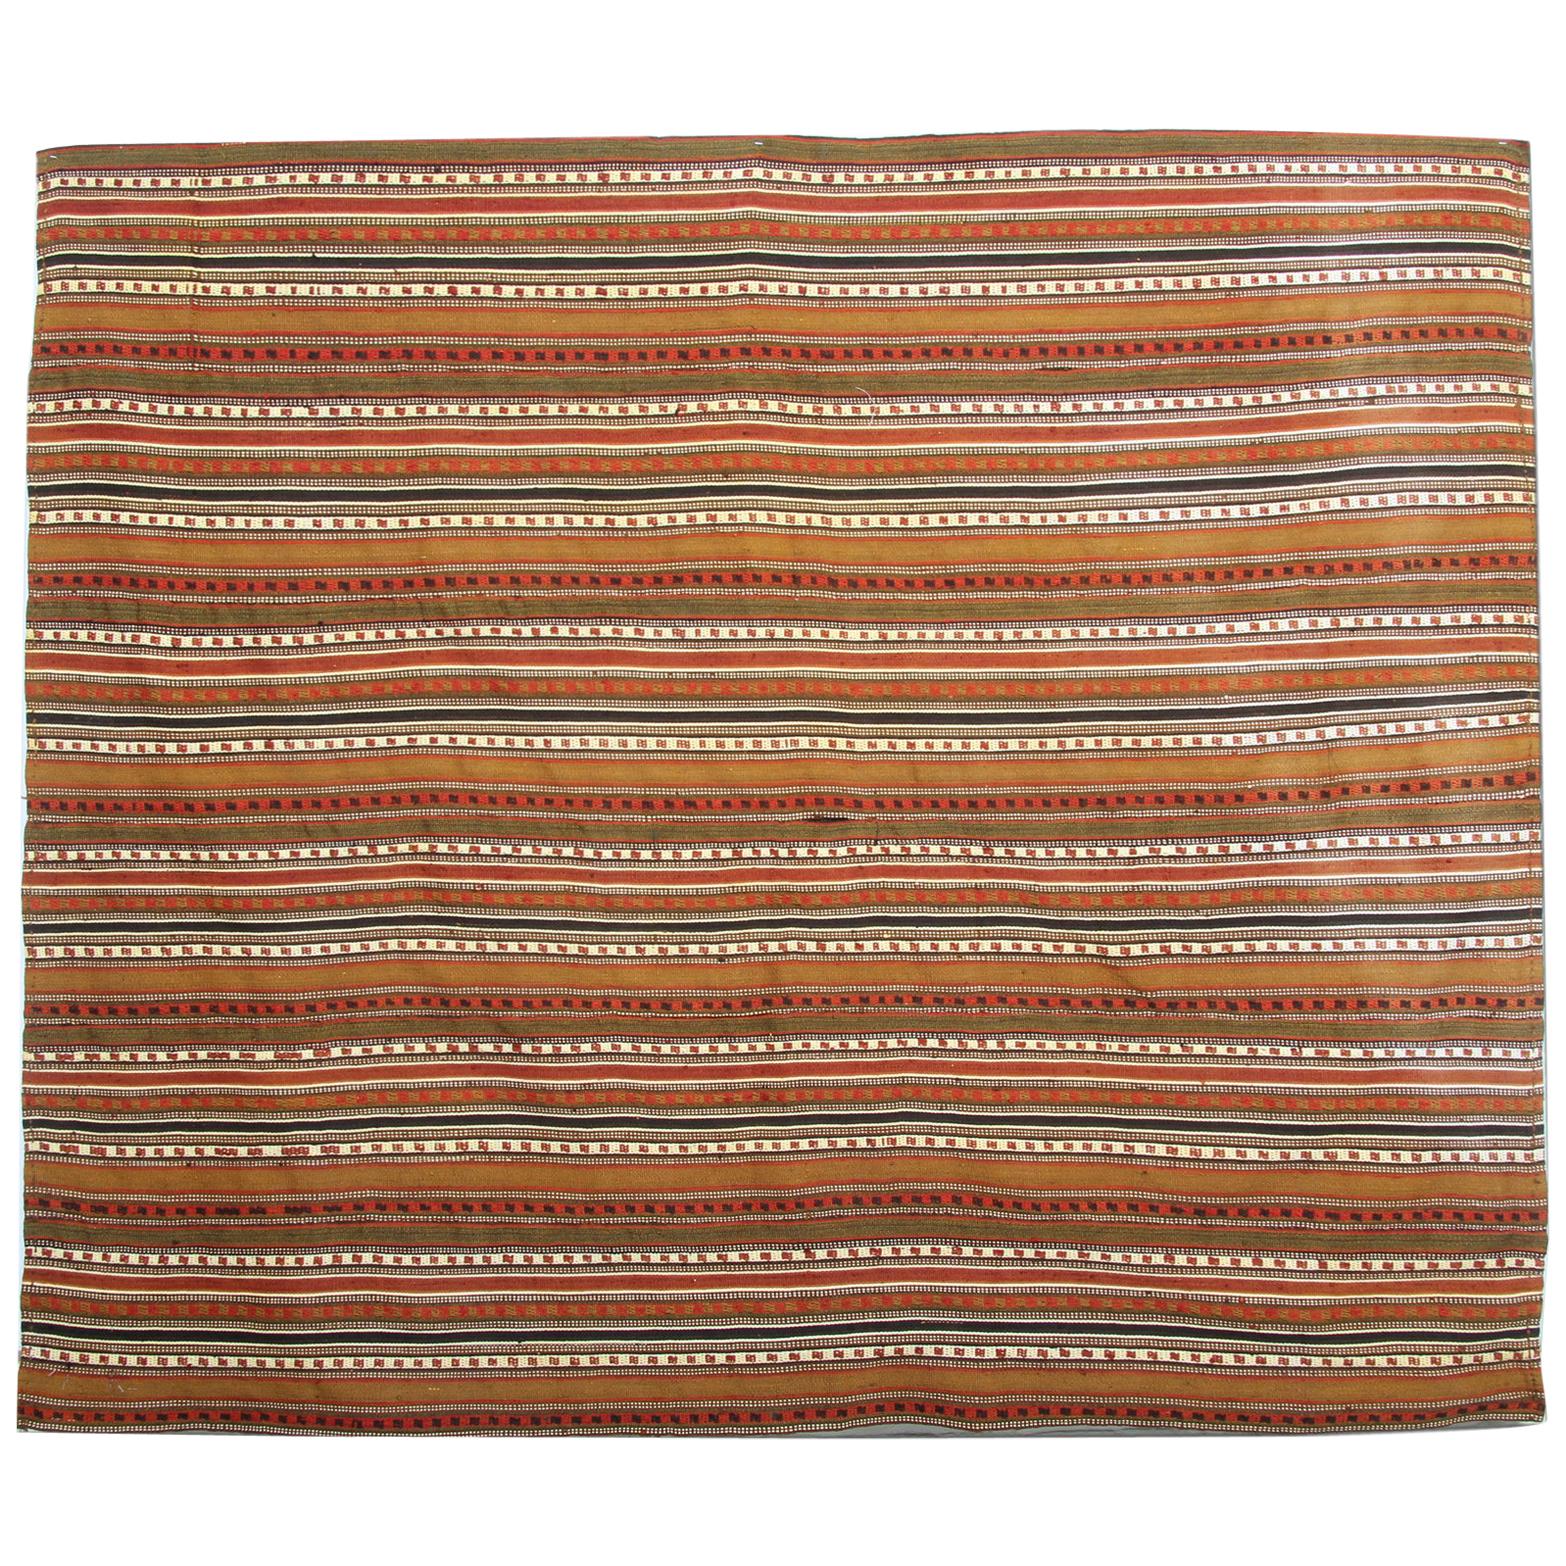 Antique Rugs Azerbaijan 'Jajim' Red Striped Handmade Flat-Woven Textile